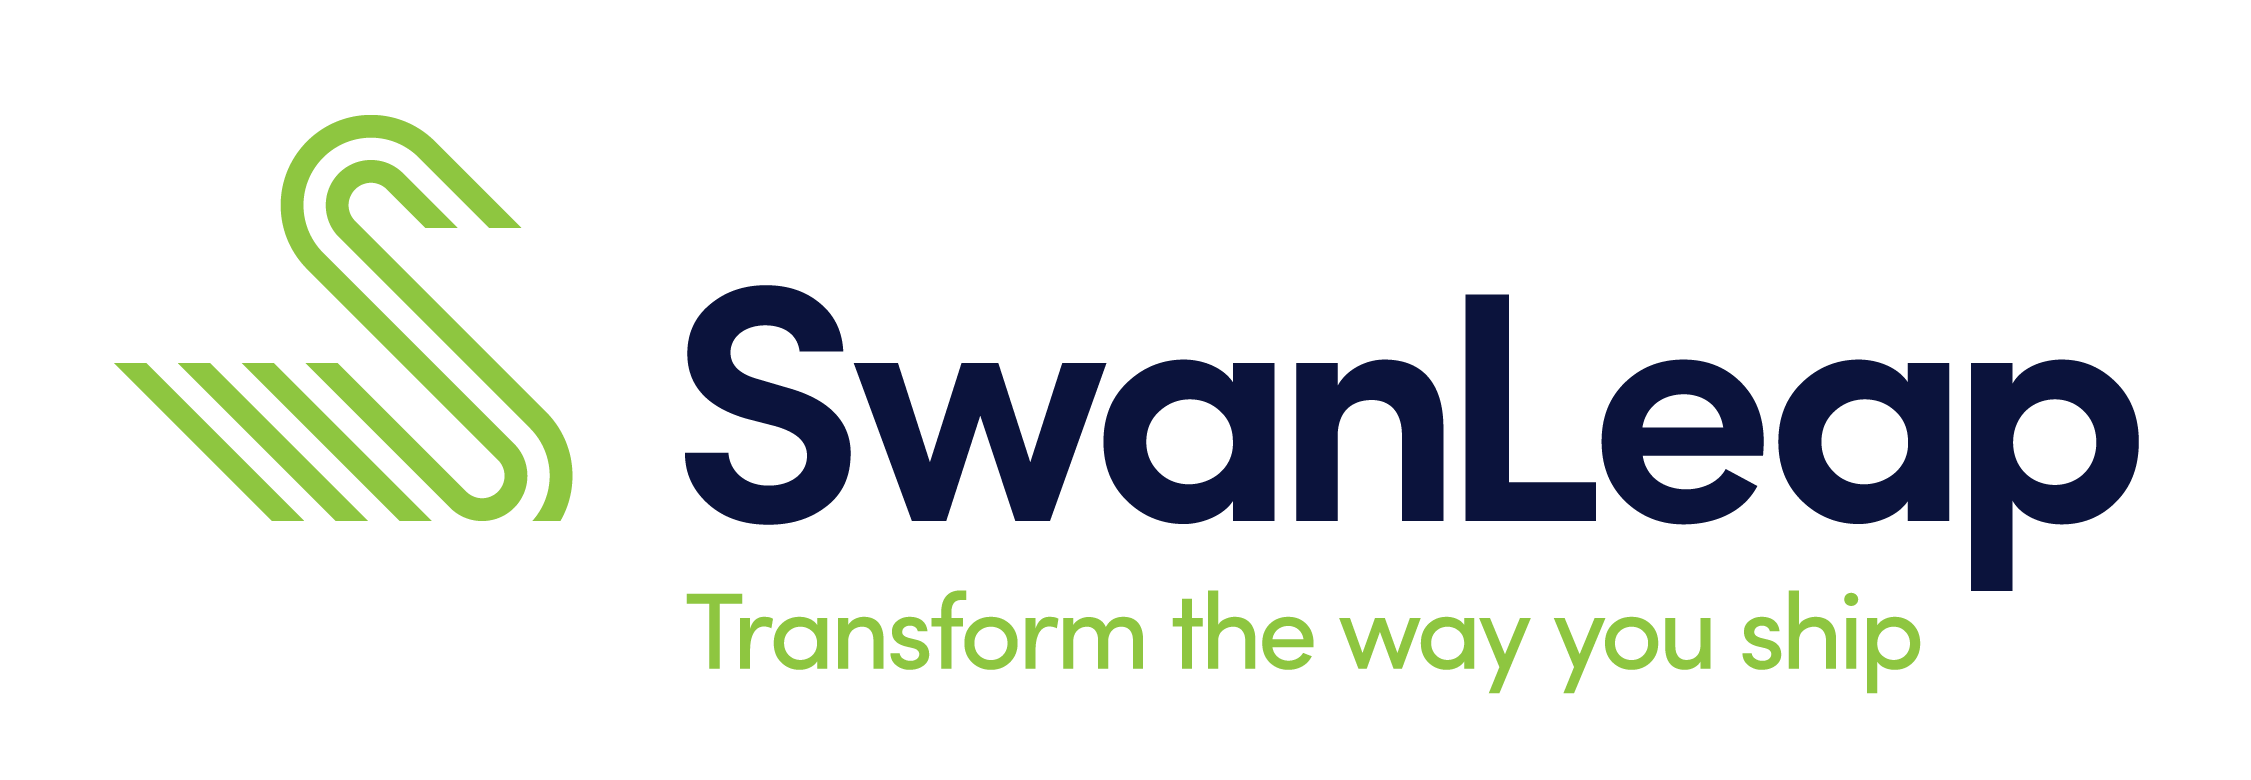 SwanLeap. Transform the way you ship.